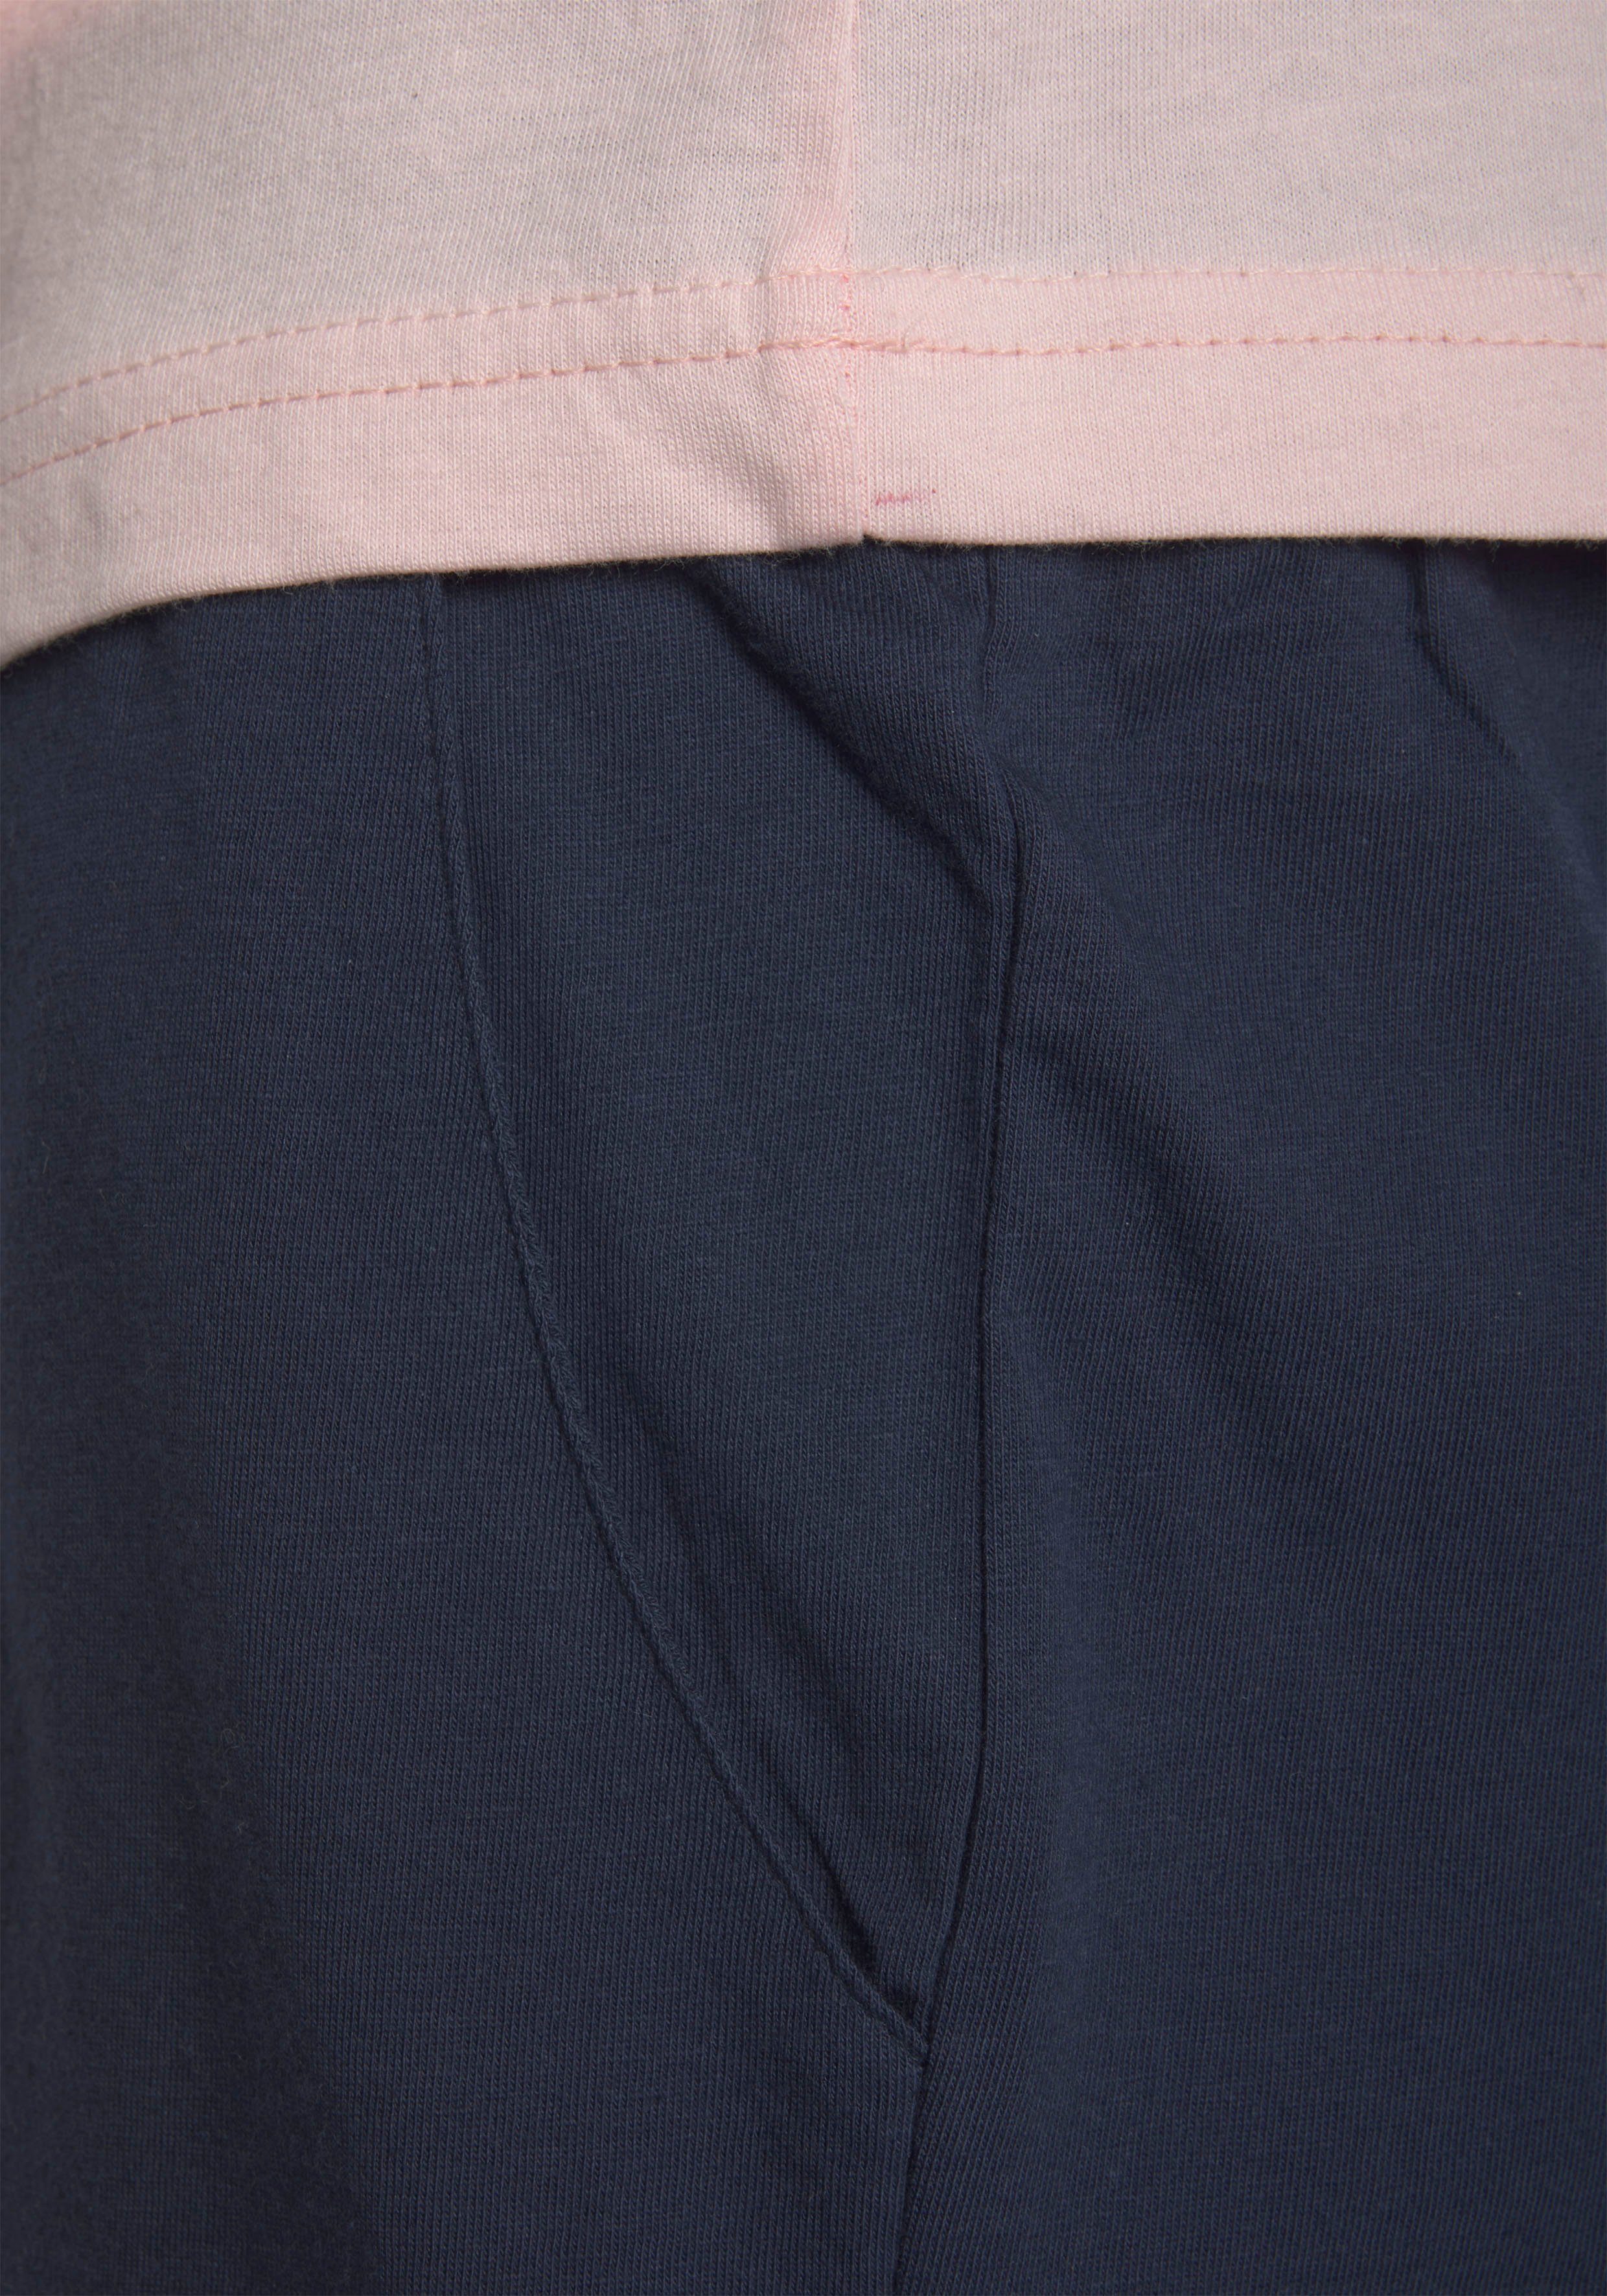 KangaROOS Shorty (2 mit Raglanärmeln kontrastfarbenen 1 Stück) rosa-dunkelblau tlg